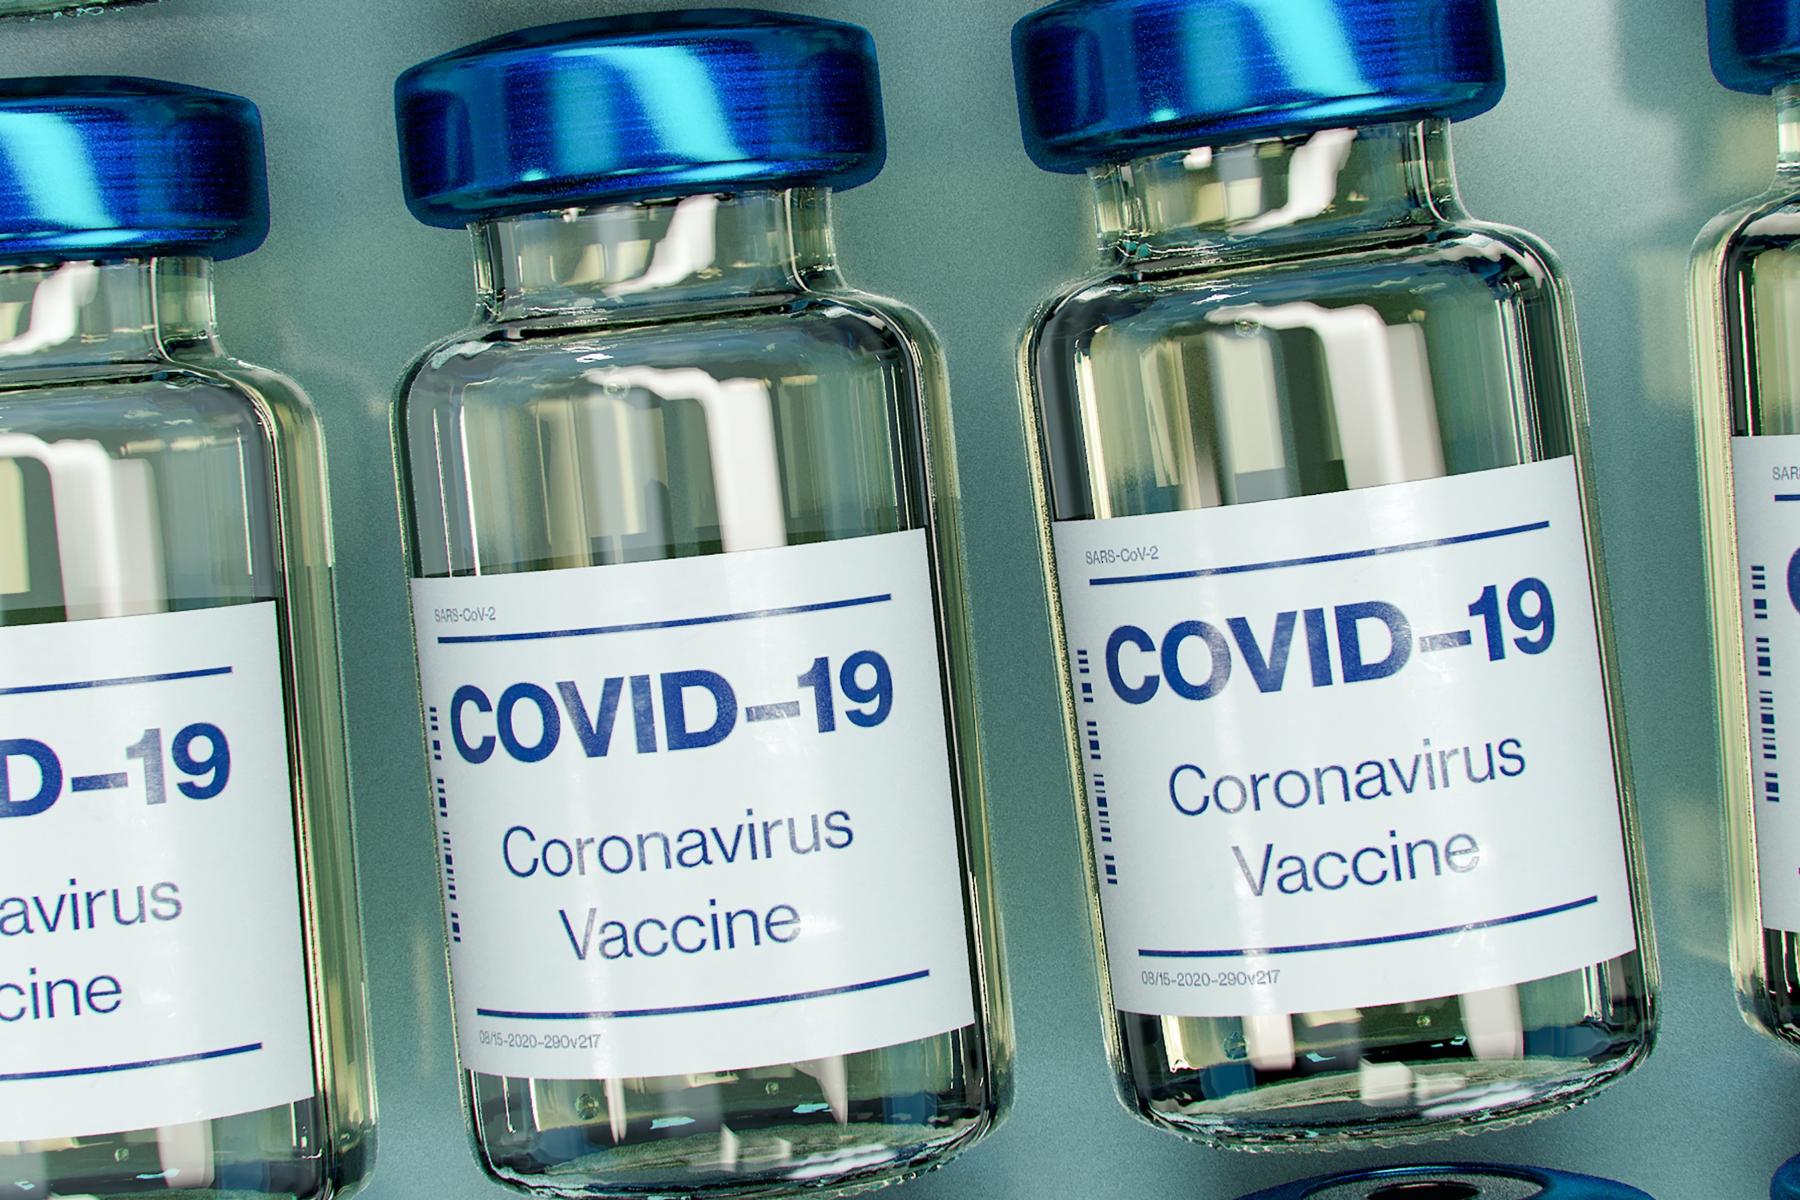 COVID vaccine image of glass vials labeled COVID-19 Coronavirus Vaccine